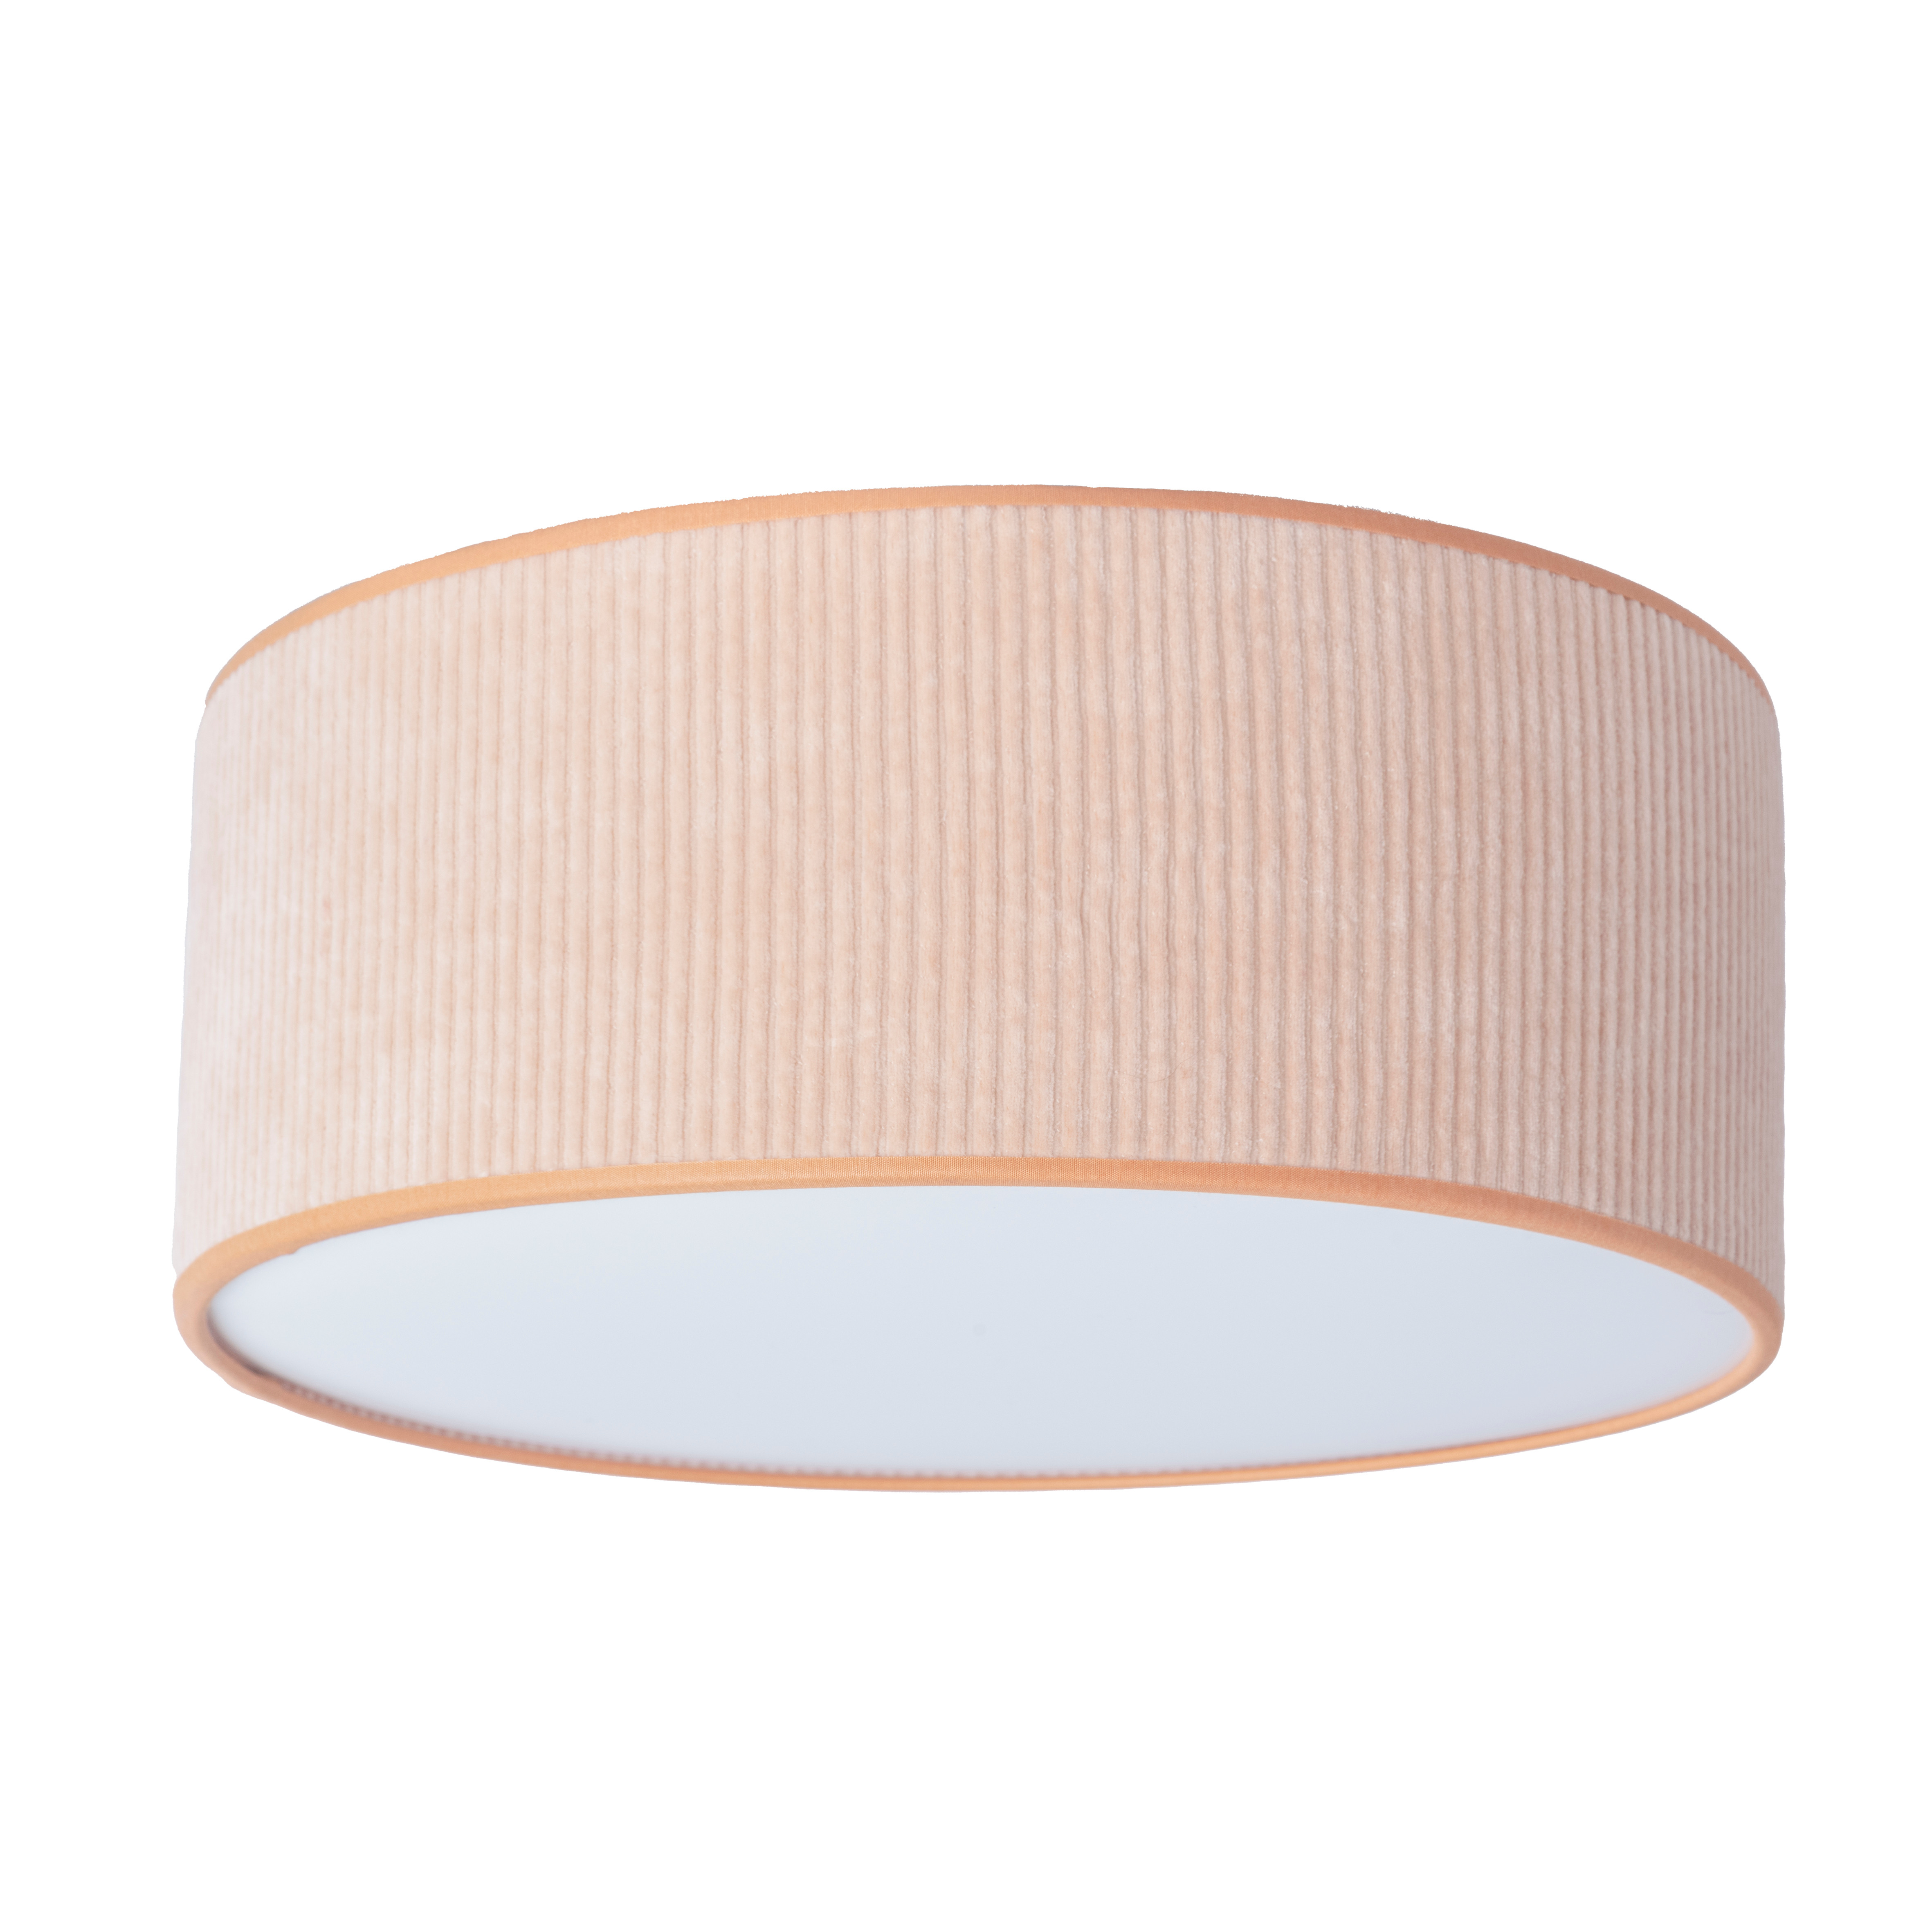 Lampe de plafond Sense peach - Ø35 cm